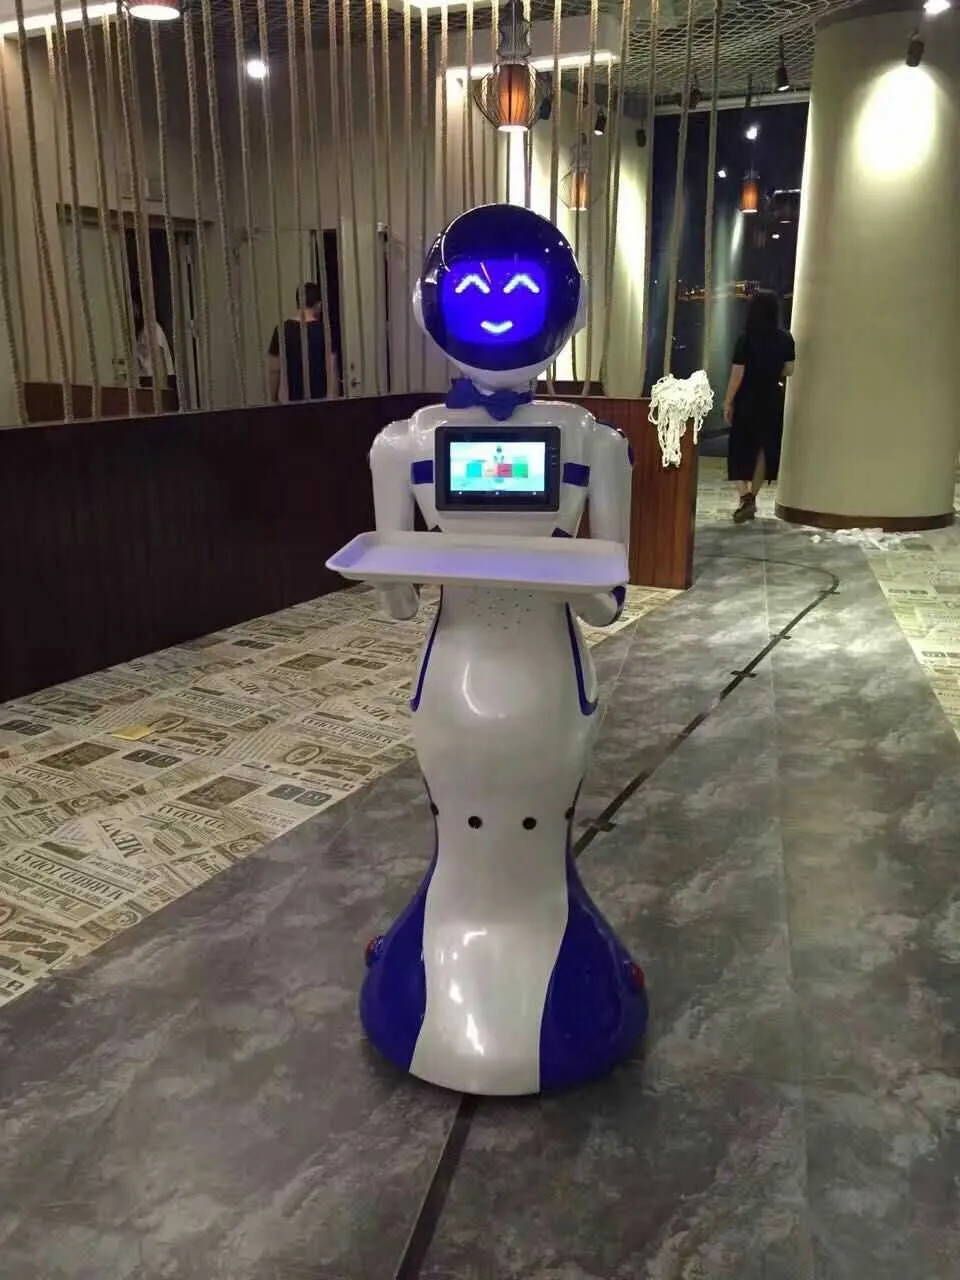 Wifi 4G Bluetooth smart Humanoid доставка ресторанов официант сервис робот